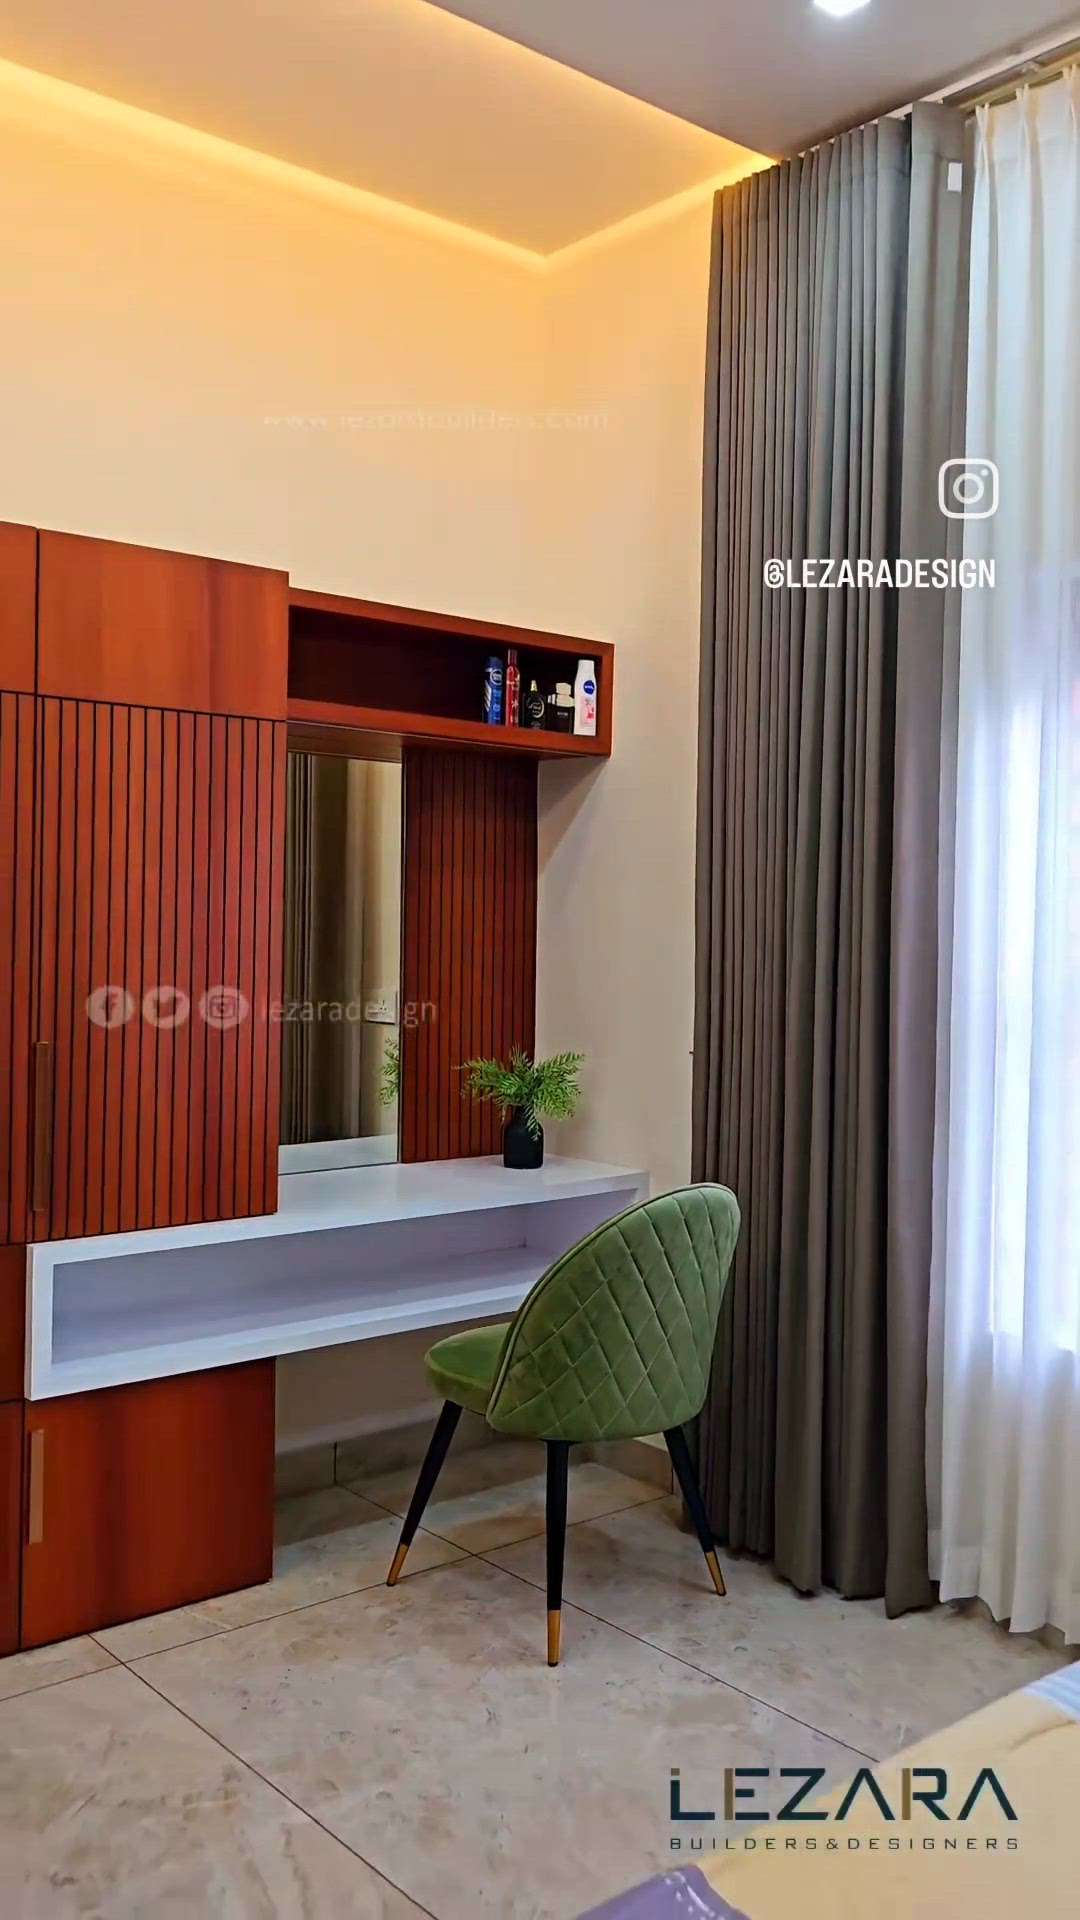 Finished bedroom interior
#BedroomDecor #WardrobeDesigns #interiordecor #HomeDecor #interiorstylist